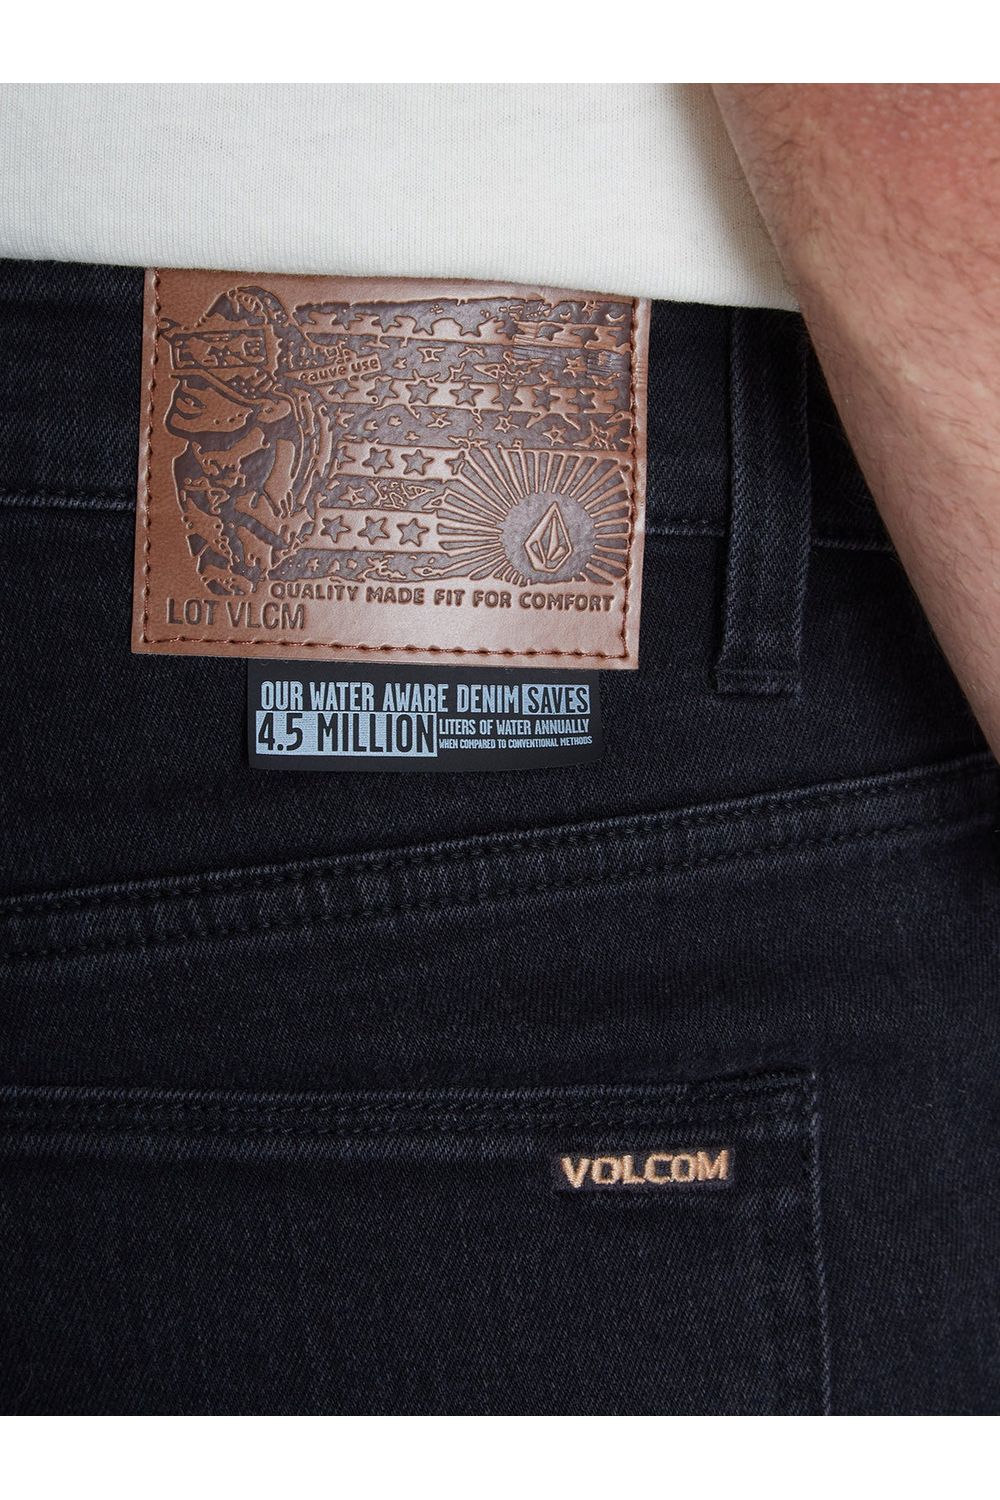 Volcom Solver Denim Jeans Black Out